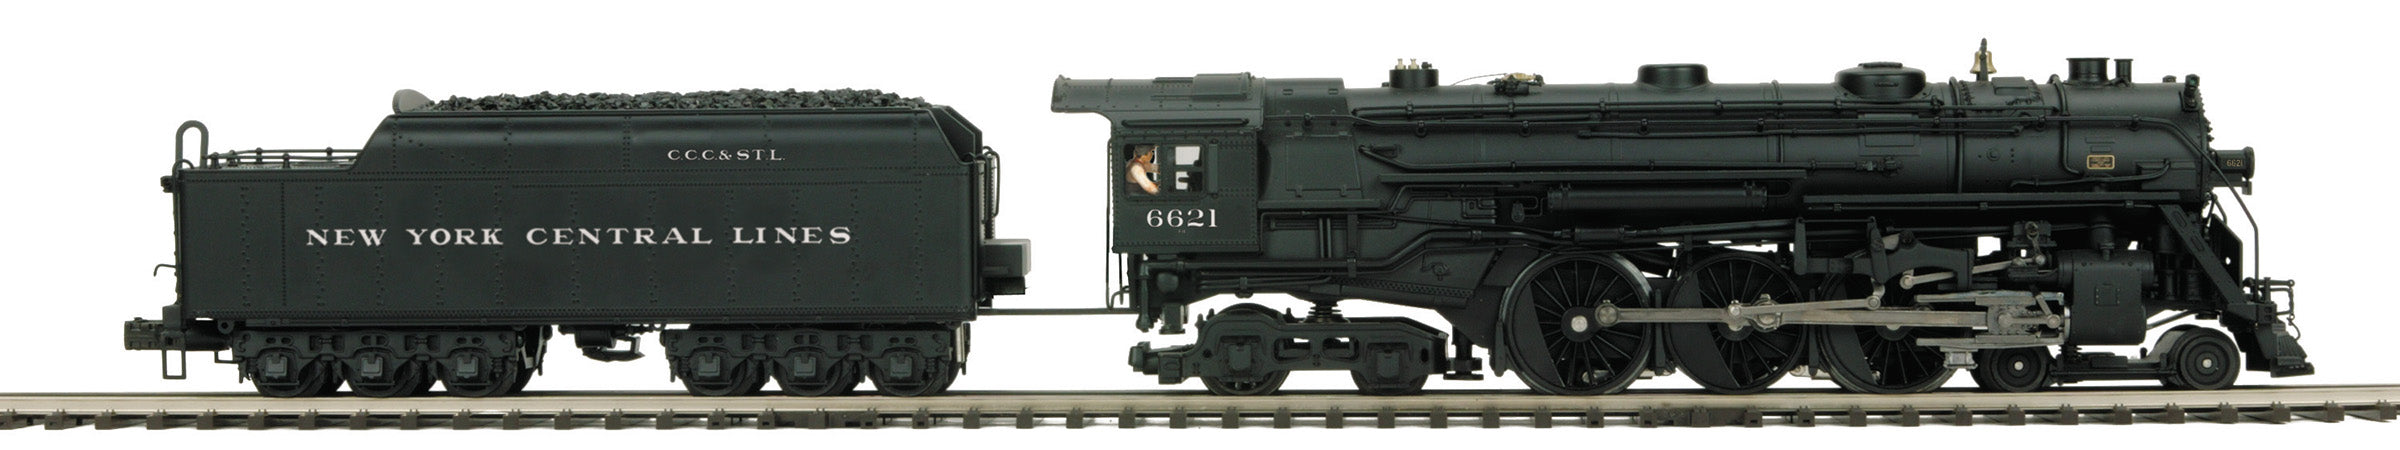 MTH 20-3871-1 - 4-6-4 J-1e Hudson Steam Engine "New York Central Lines" #6621 w/ PS3 (CCC&StL) - Custom Run for MrMuffin'sTrains